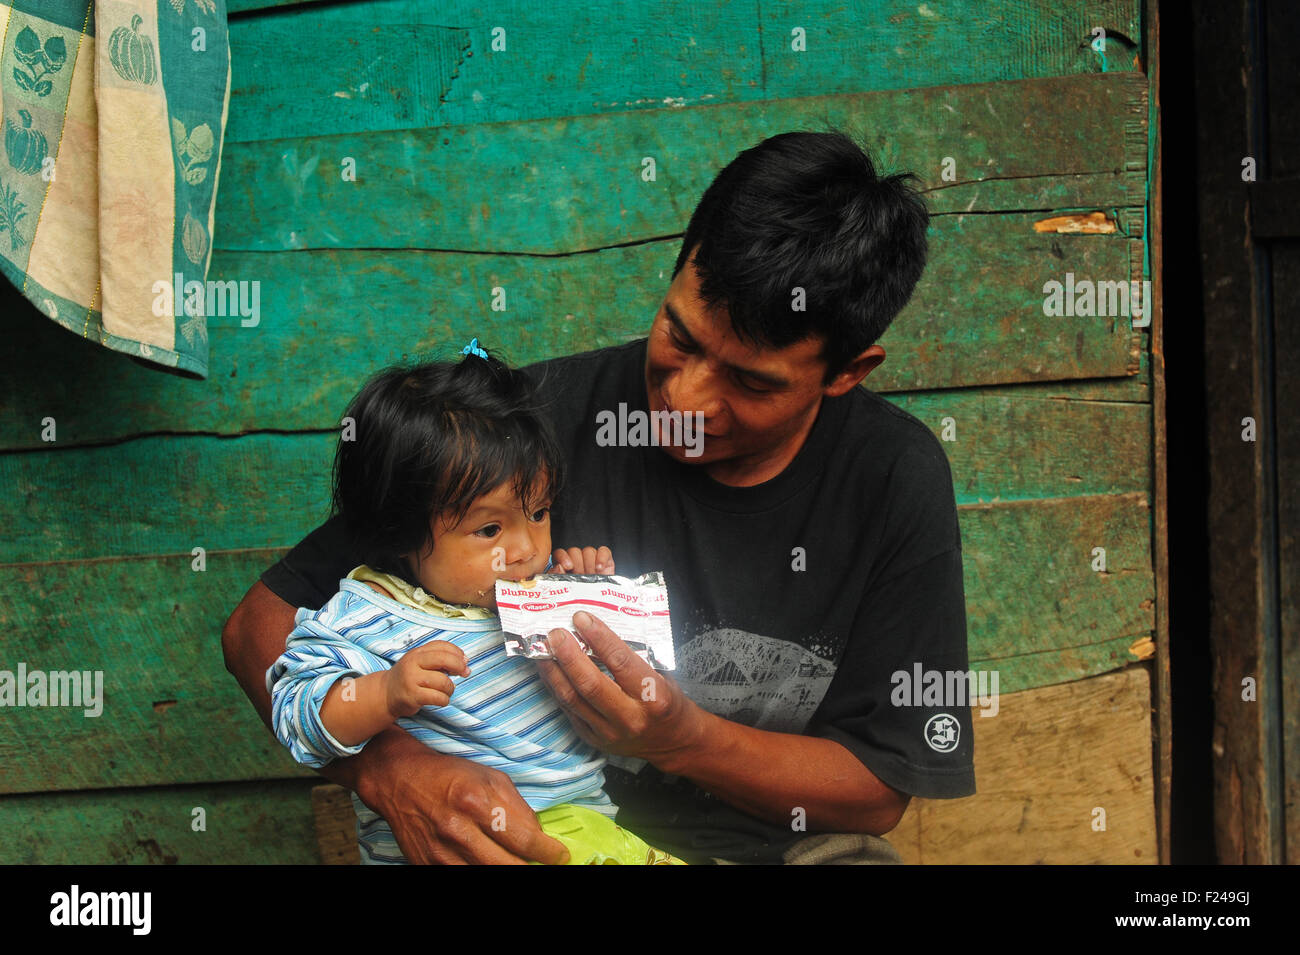 Guatemala, San Cristobal, Kind am Knie des Vaters sitzen und Essen plumpy Nut (Adolfo Cal Lem 35 und Aracely Noemi Cal Cap 1 Jahr 3 Monate) Stockfoto